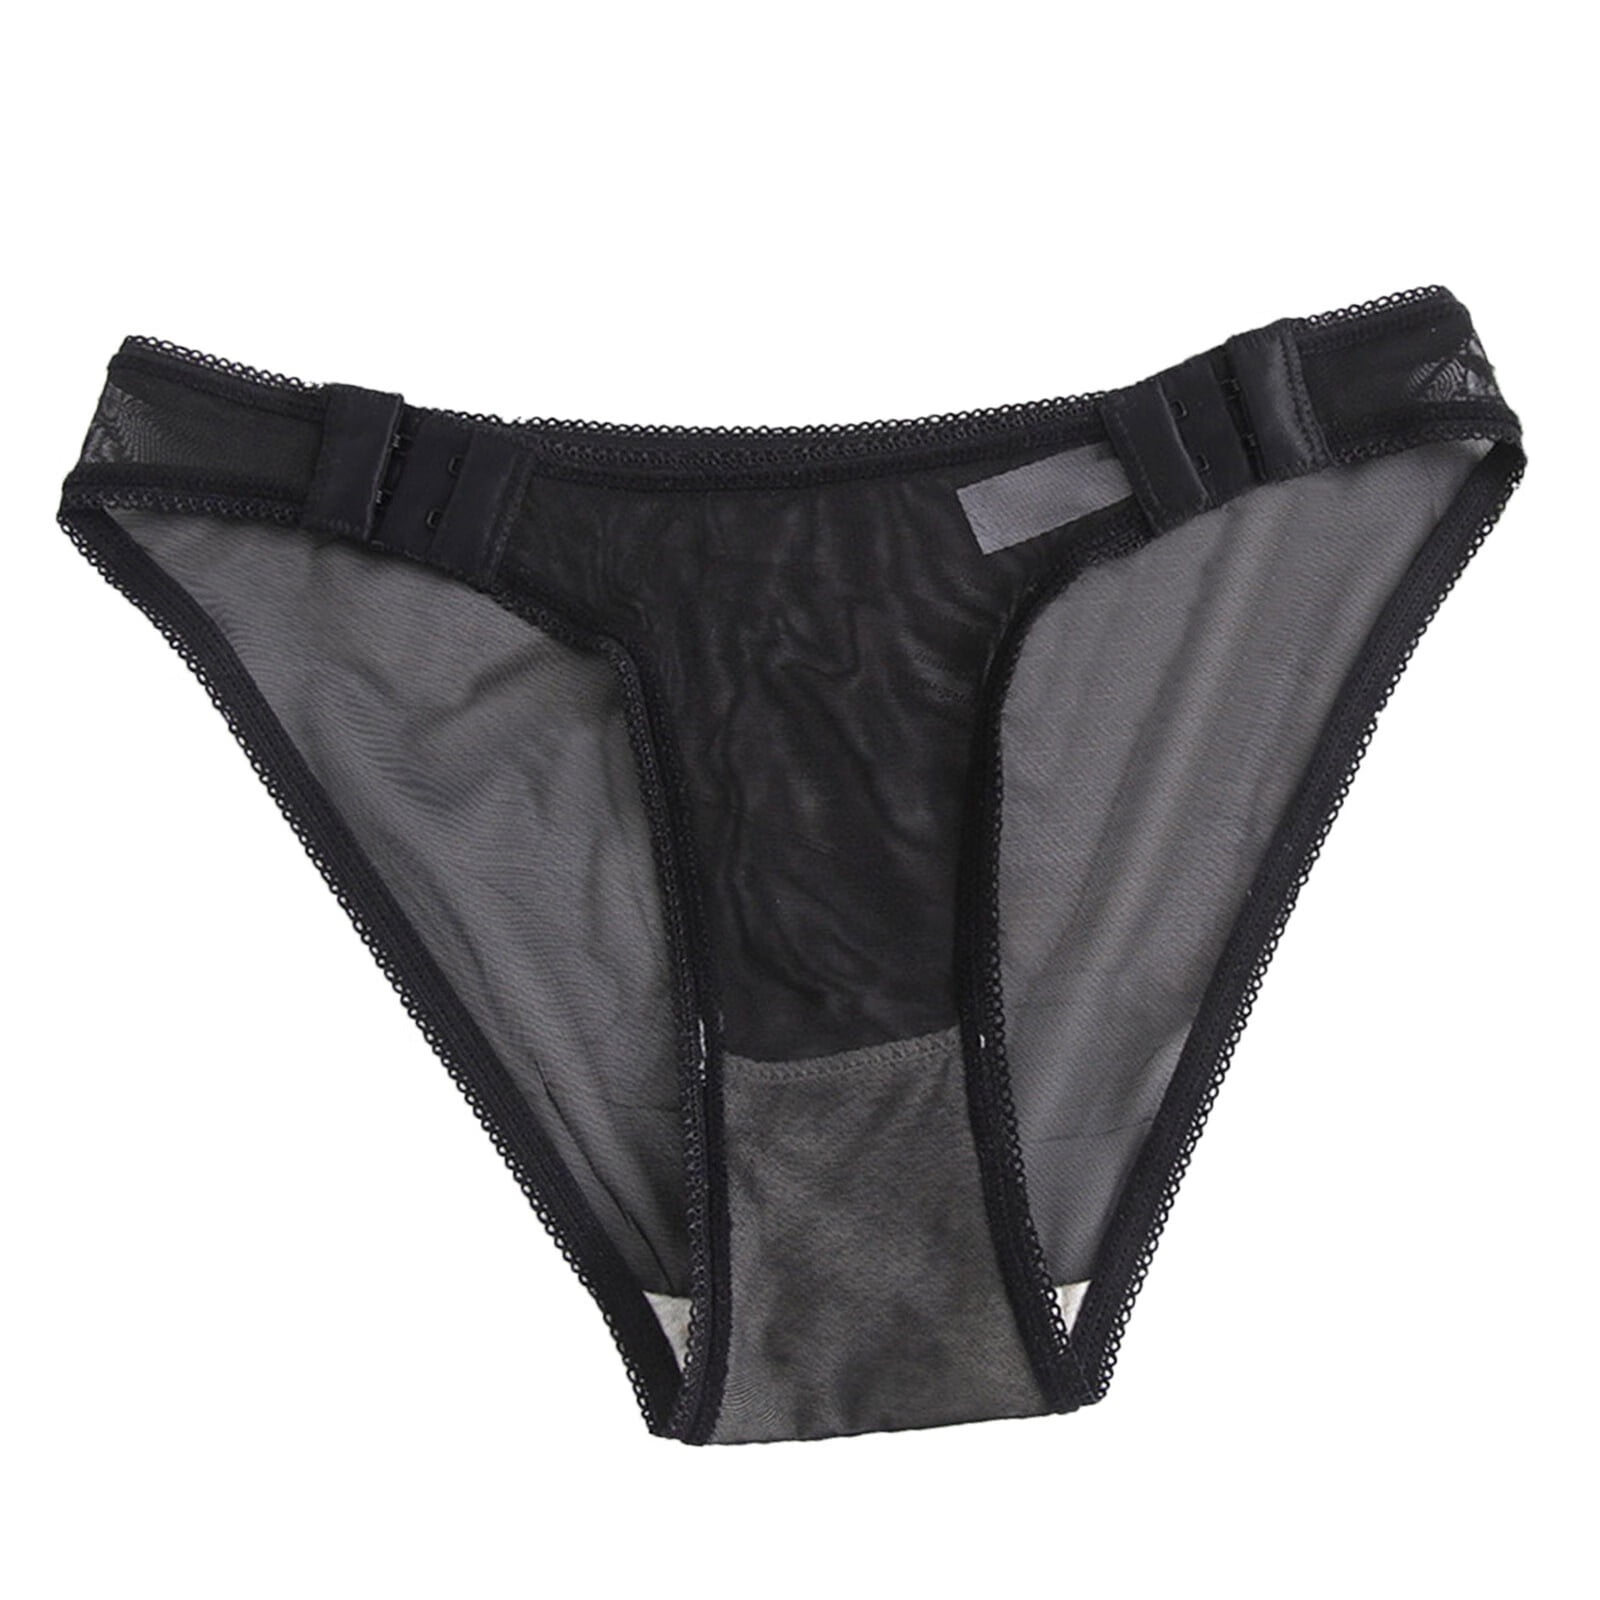 Mortilo Women'S Cotton Underwear , Woman Underwear String Stretch Underwear  Gifts For Wife Black L